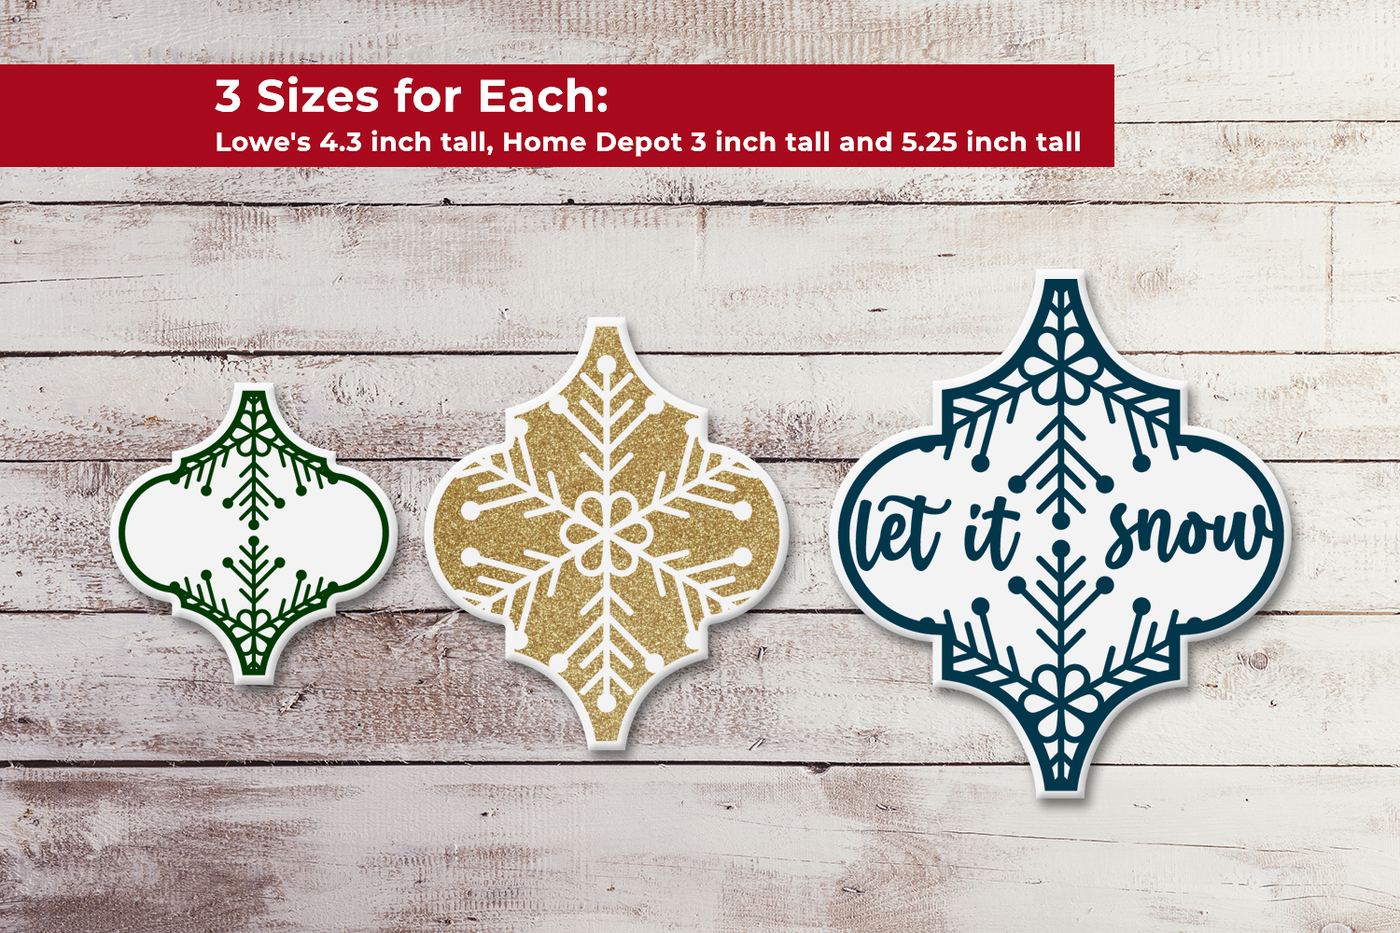 Snowflake Arabesque ornament designs